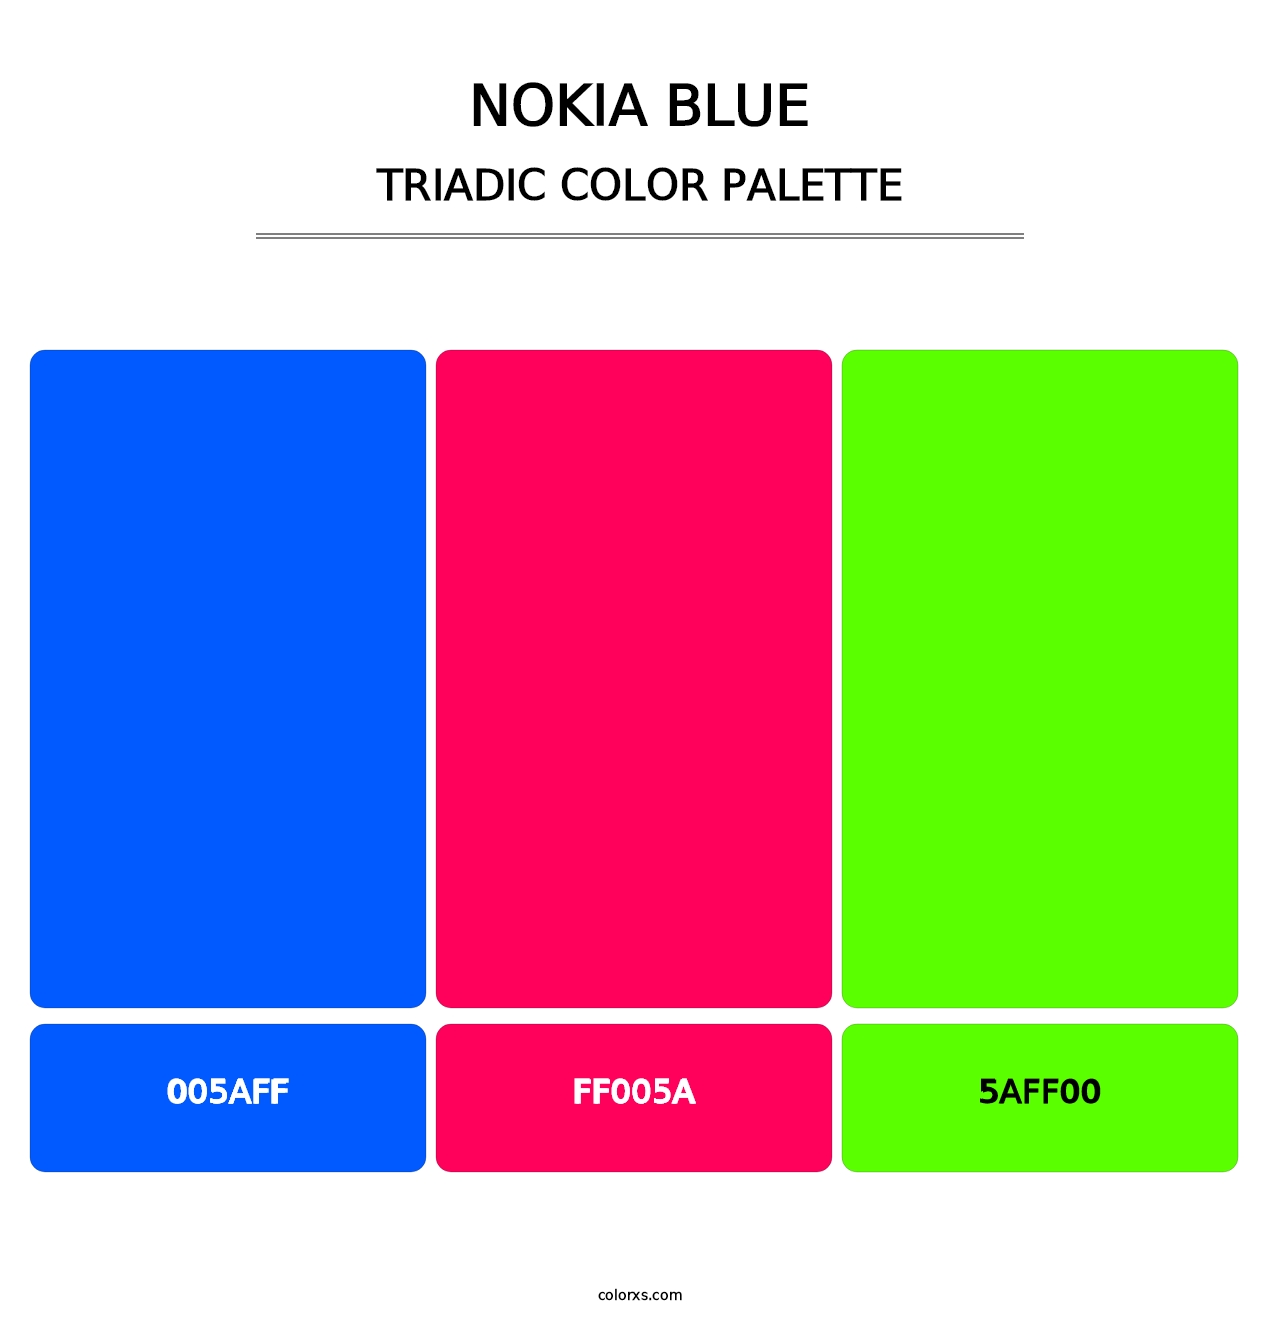 Nokia Blue - Triadic Color Palette